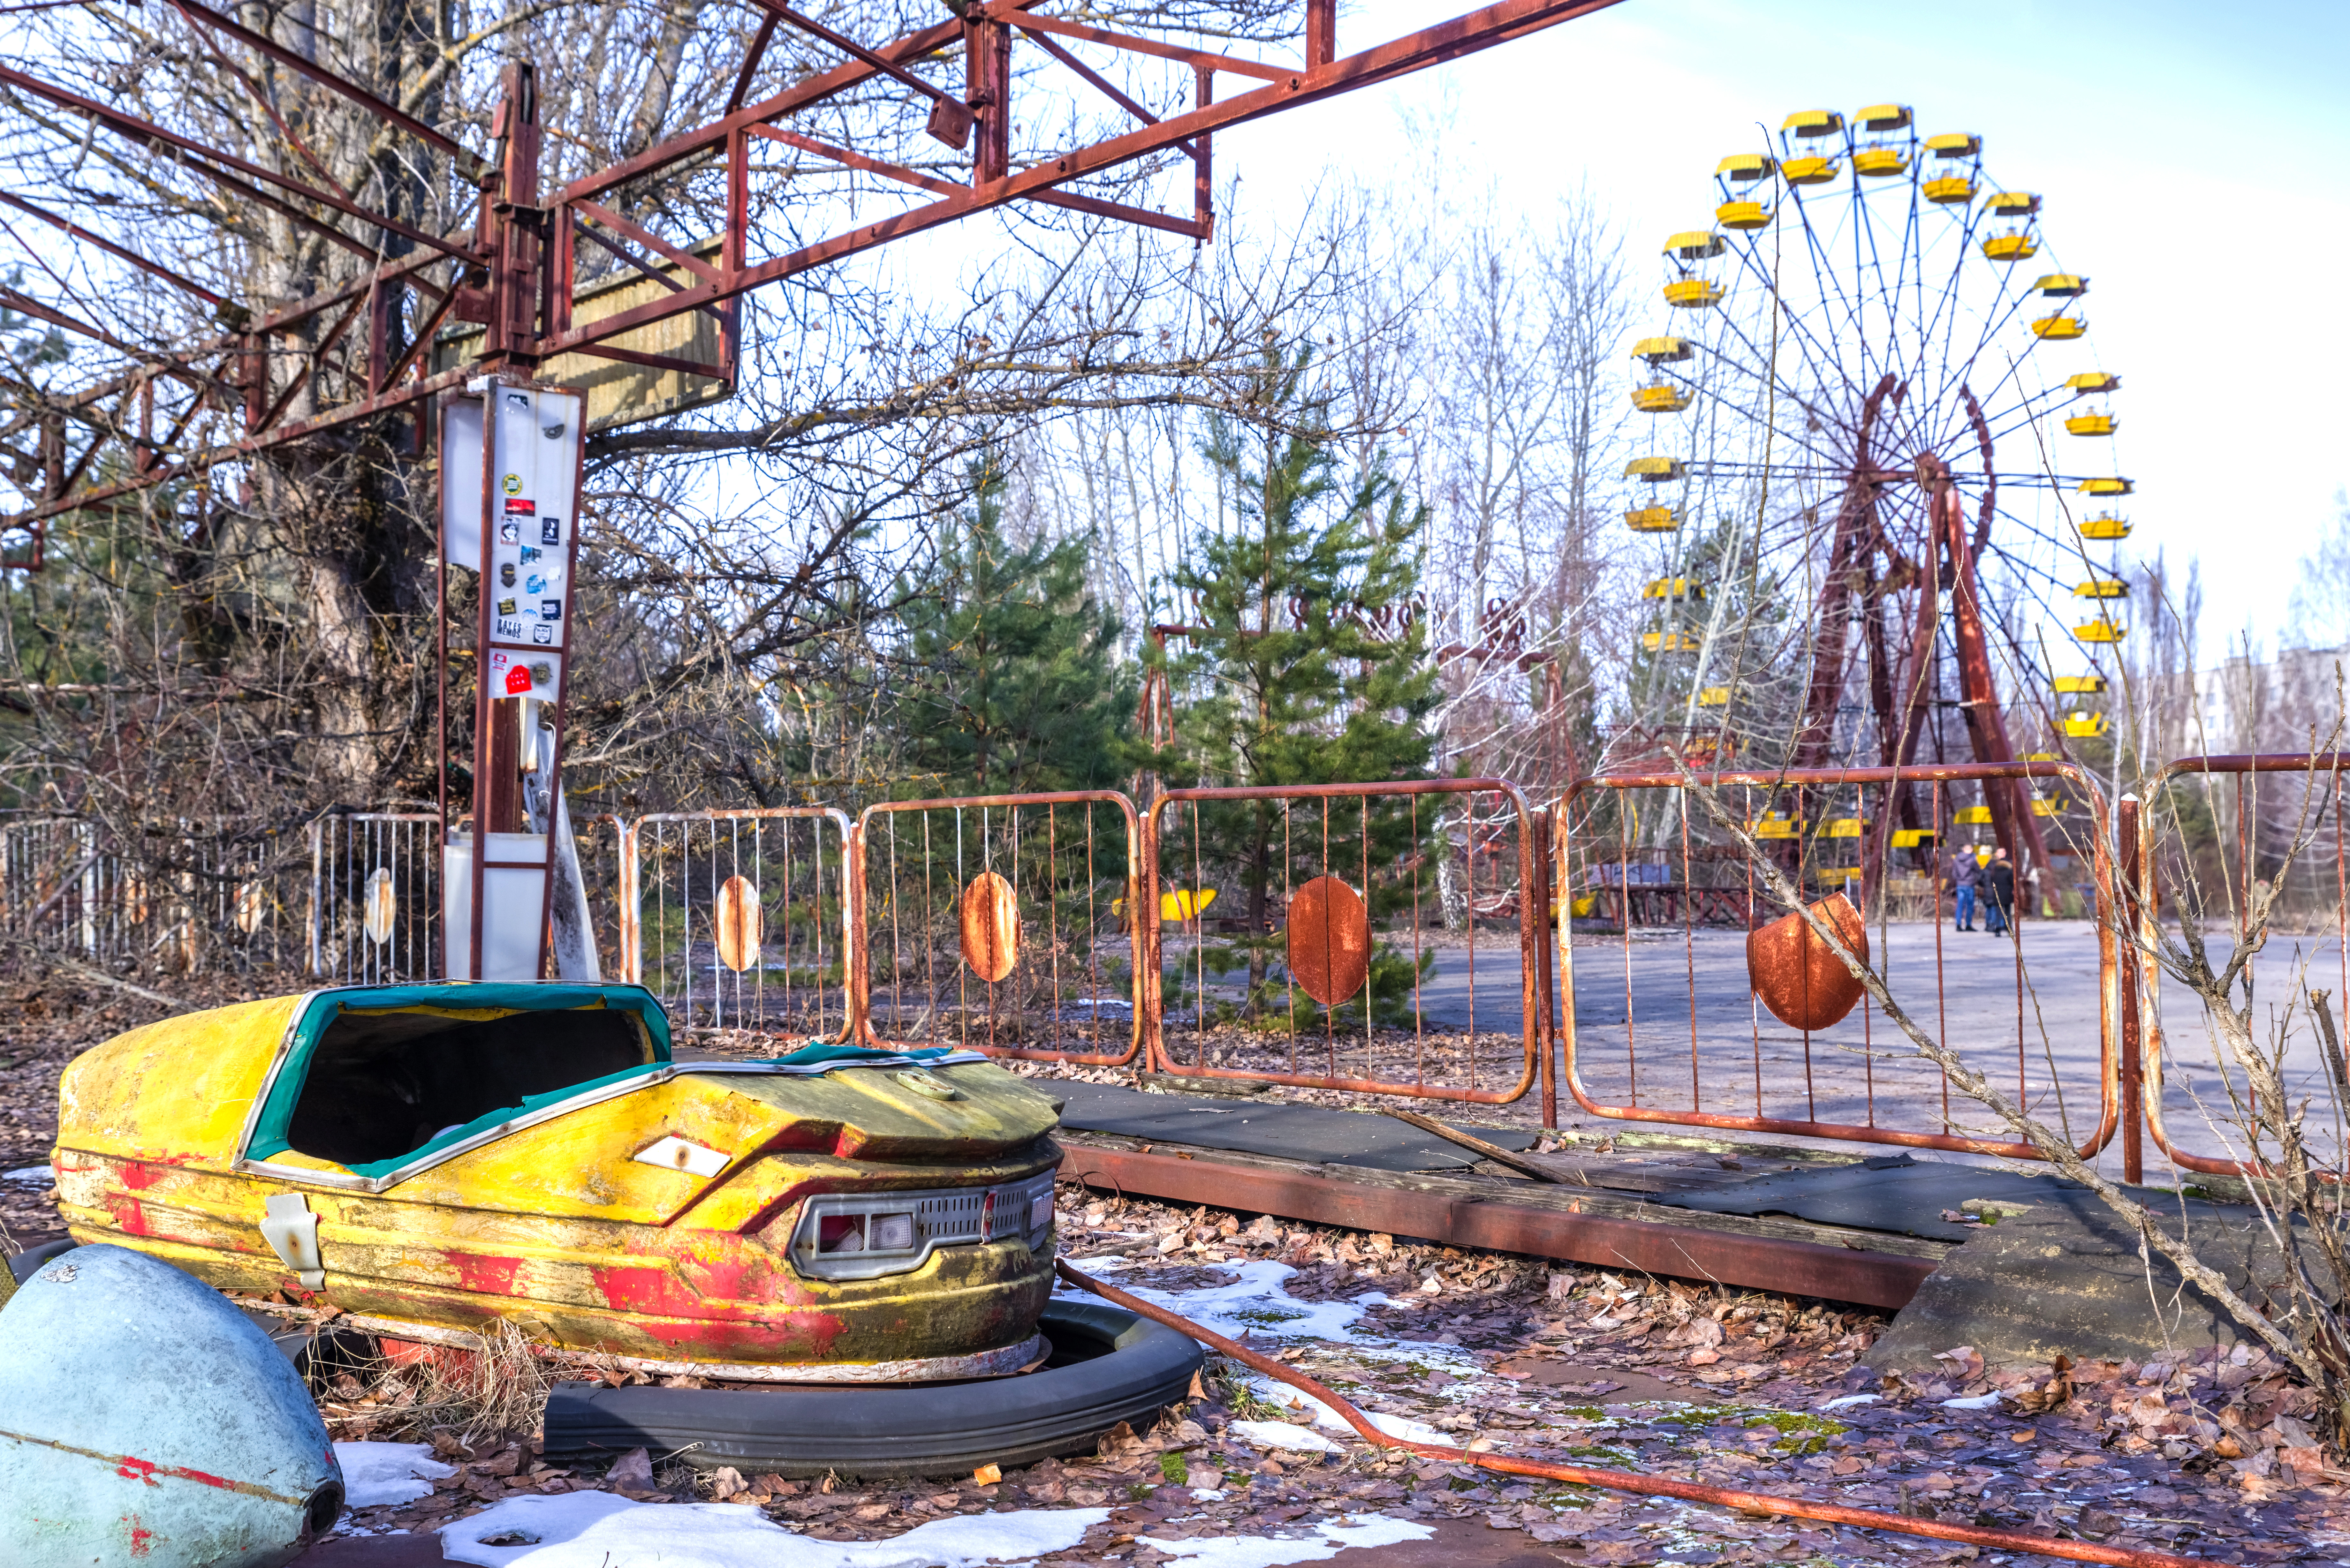 a bumper car in disrepair in front of an empty Ferris wheel